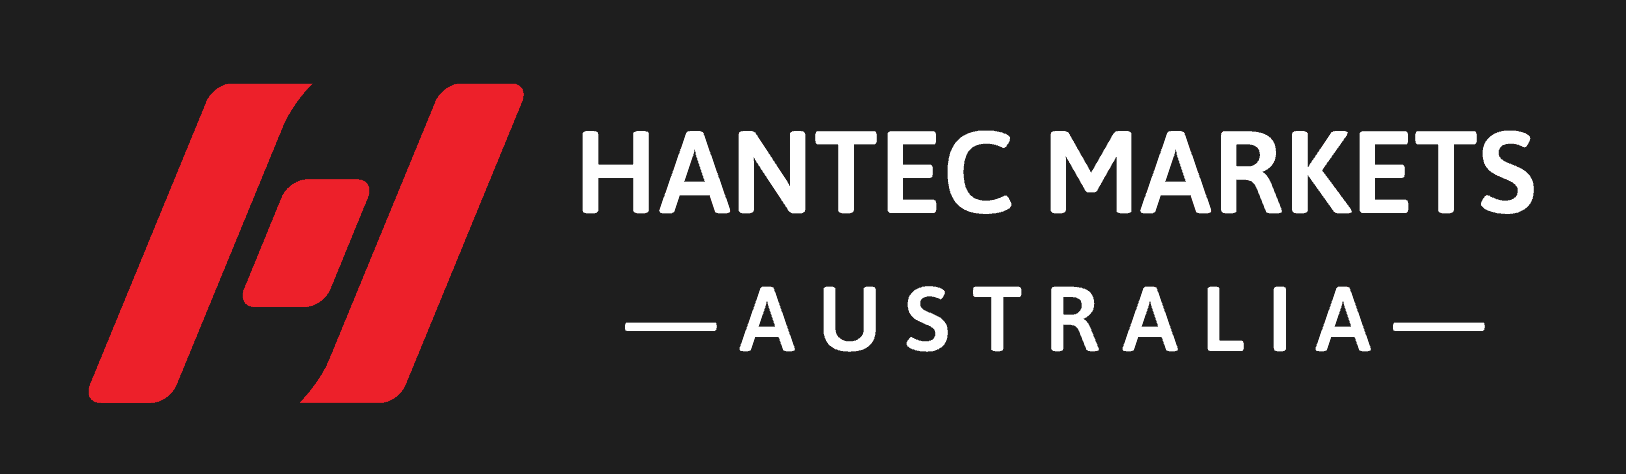 hantec markets logo 3